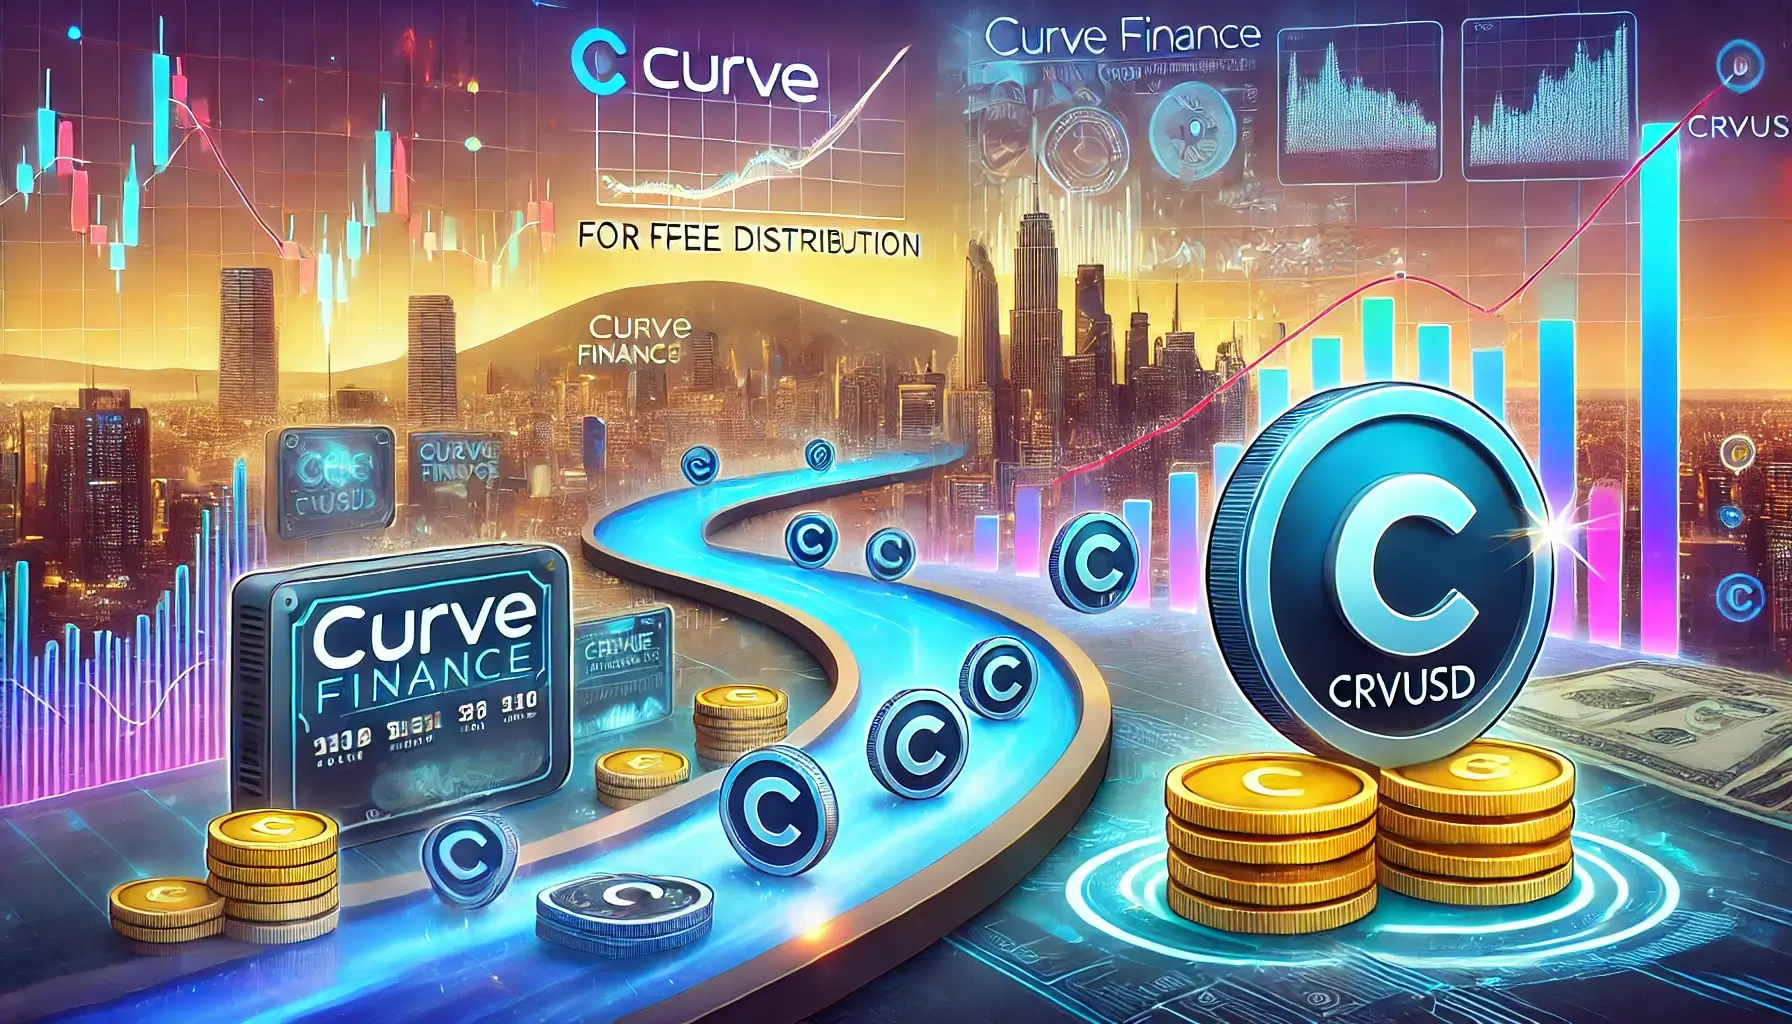 Curve Finance Adopting crvUSD for Fee Distribution